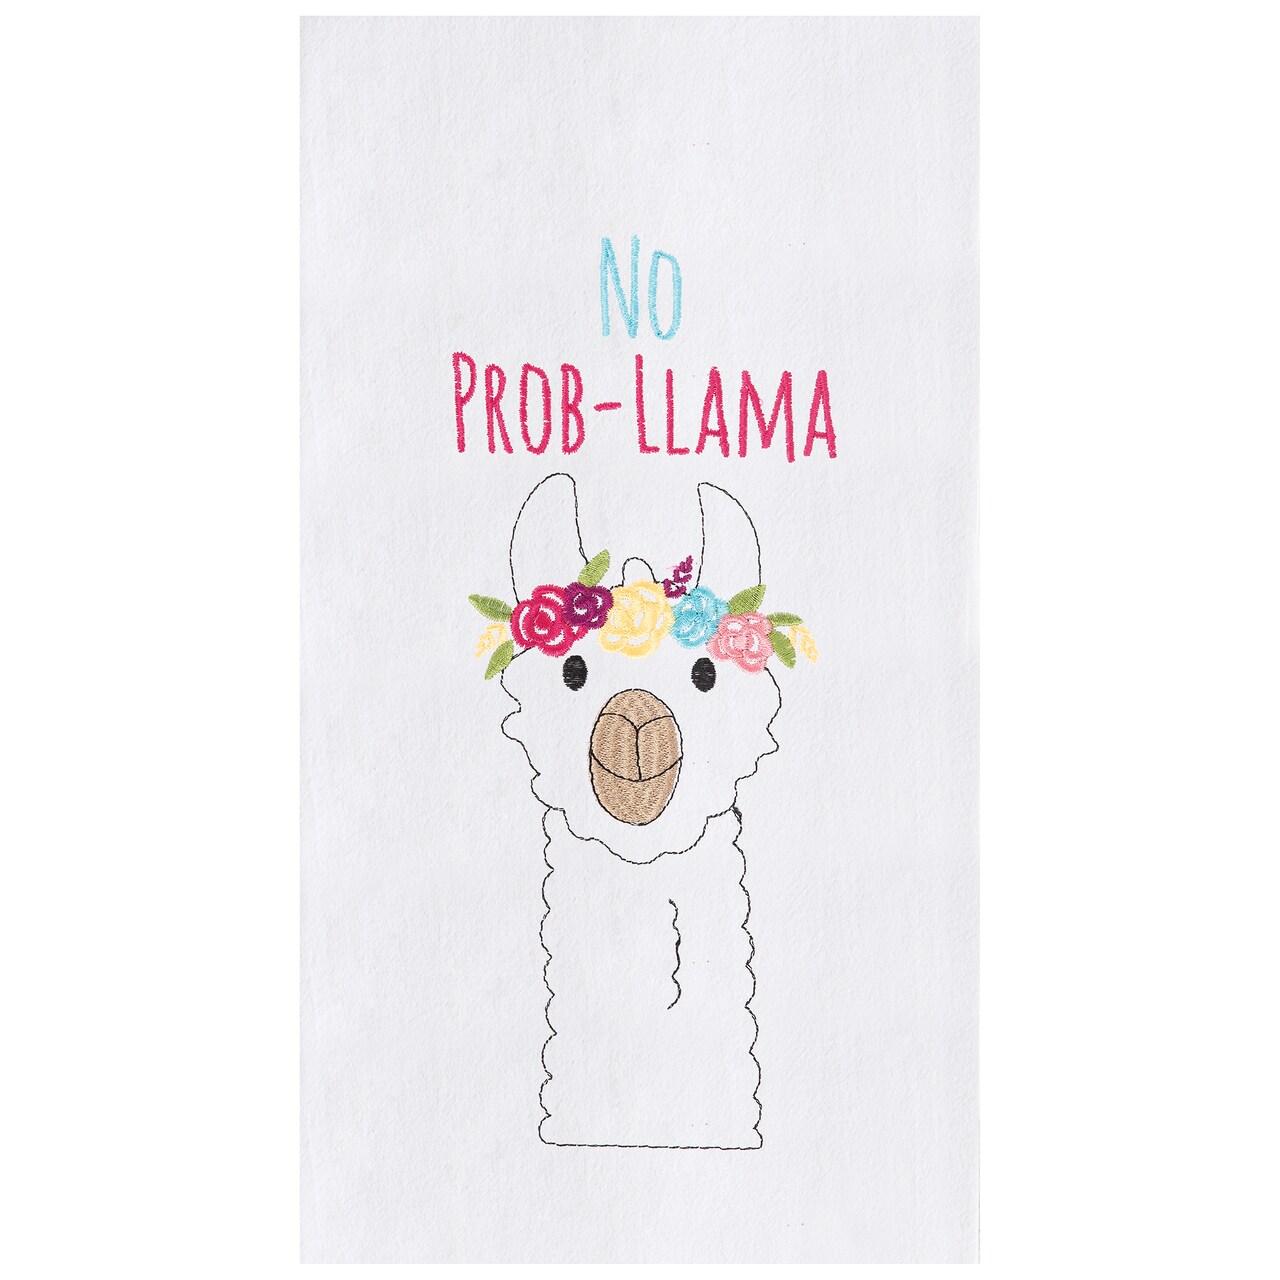 Prob-Llama Embroidered Flour Sack Kitchen Towel